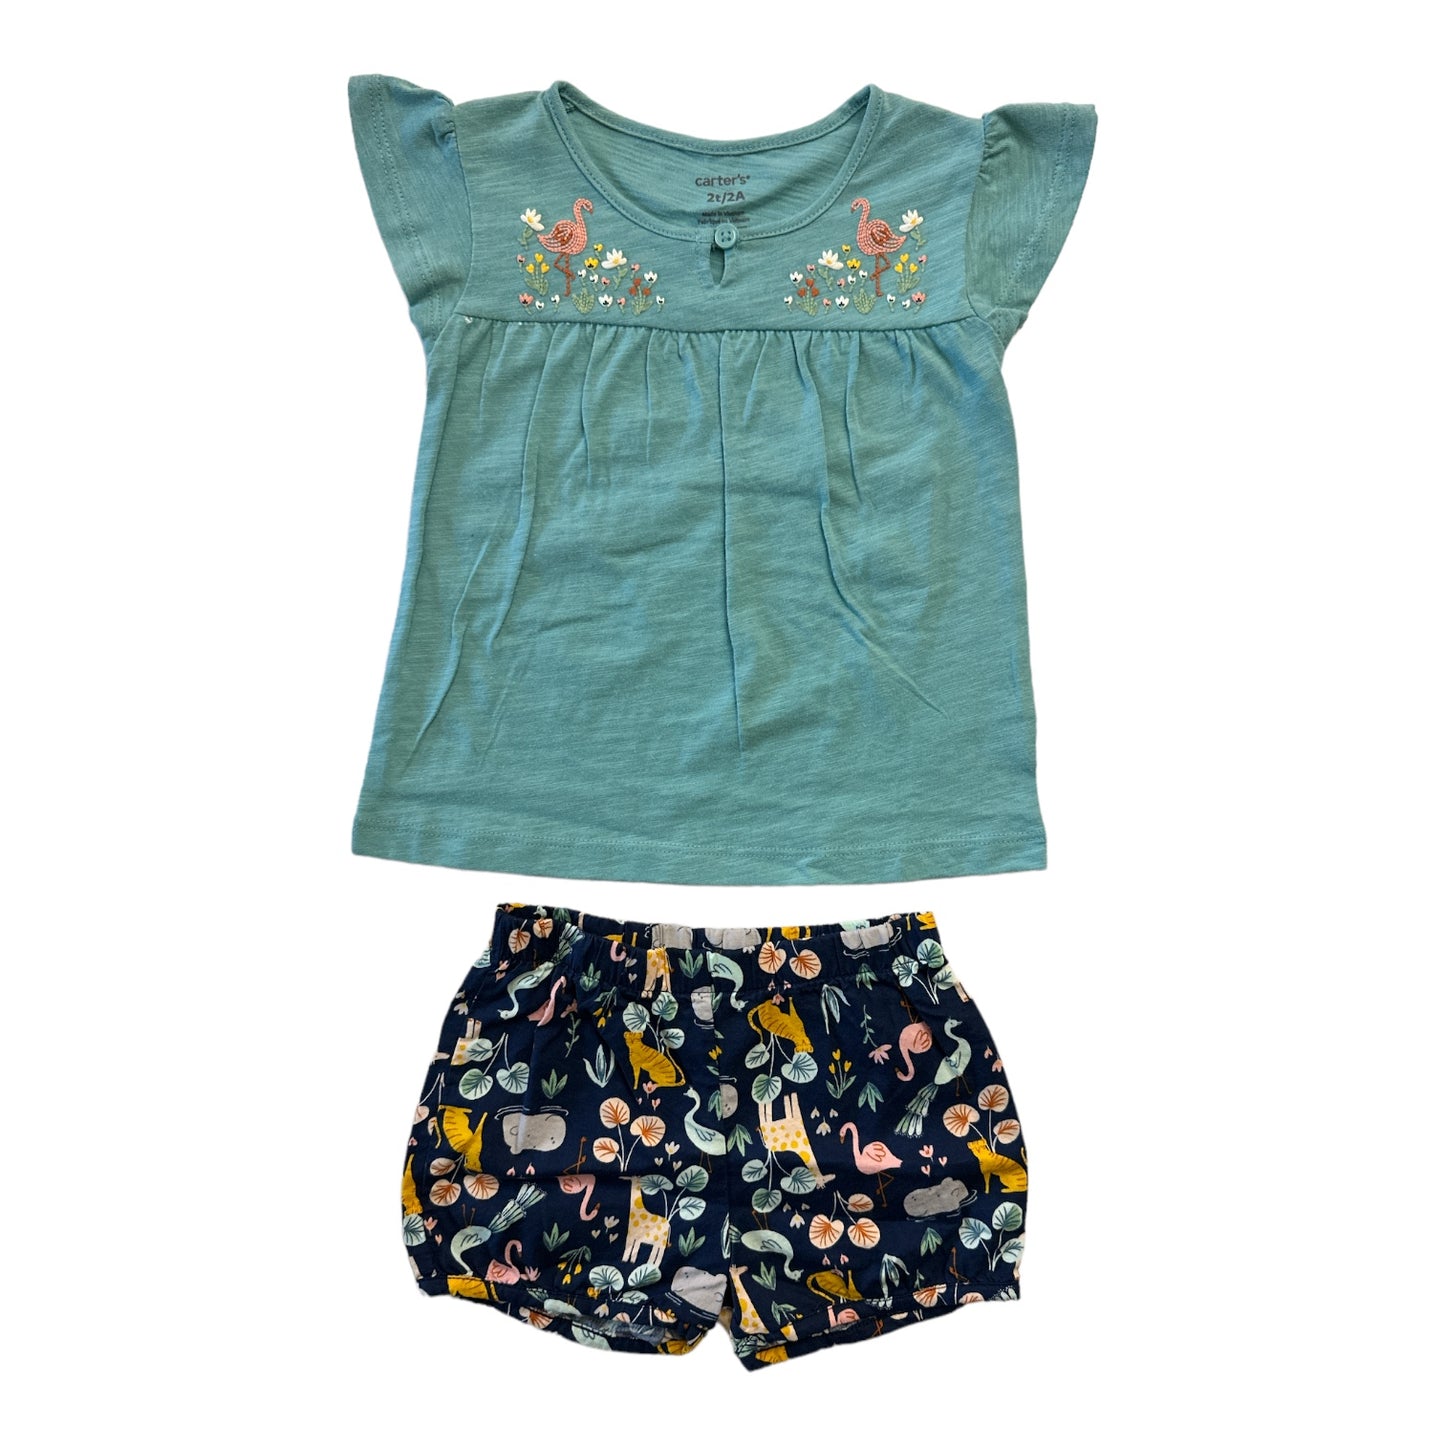 Carter's Baby & Toddler Girl's 2 Piece Ruffle Short Sleeve Top & Short Playwear Set